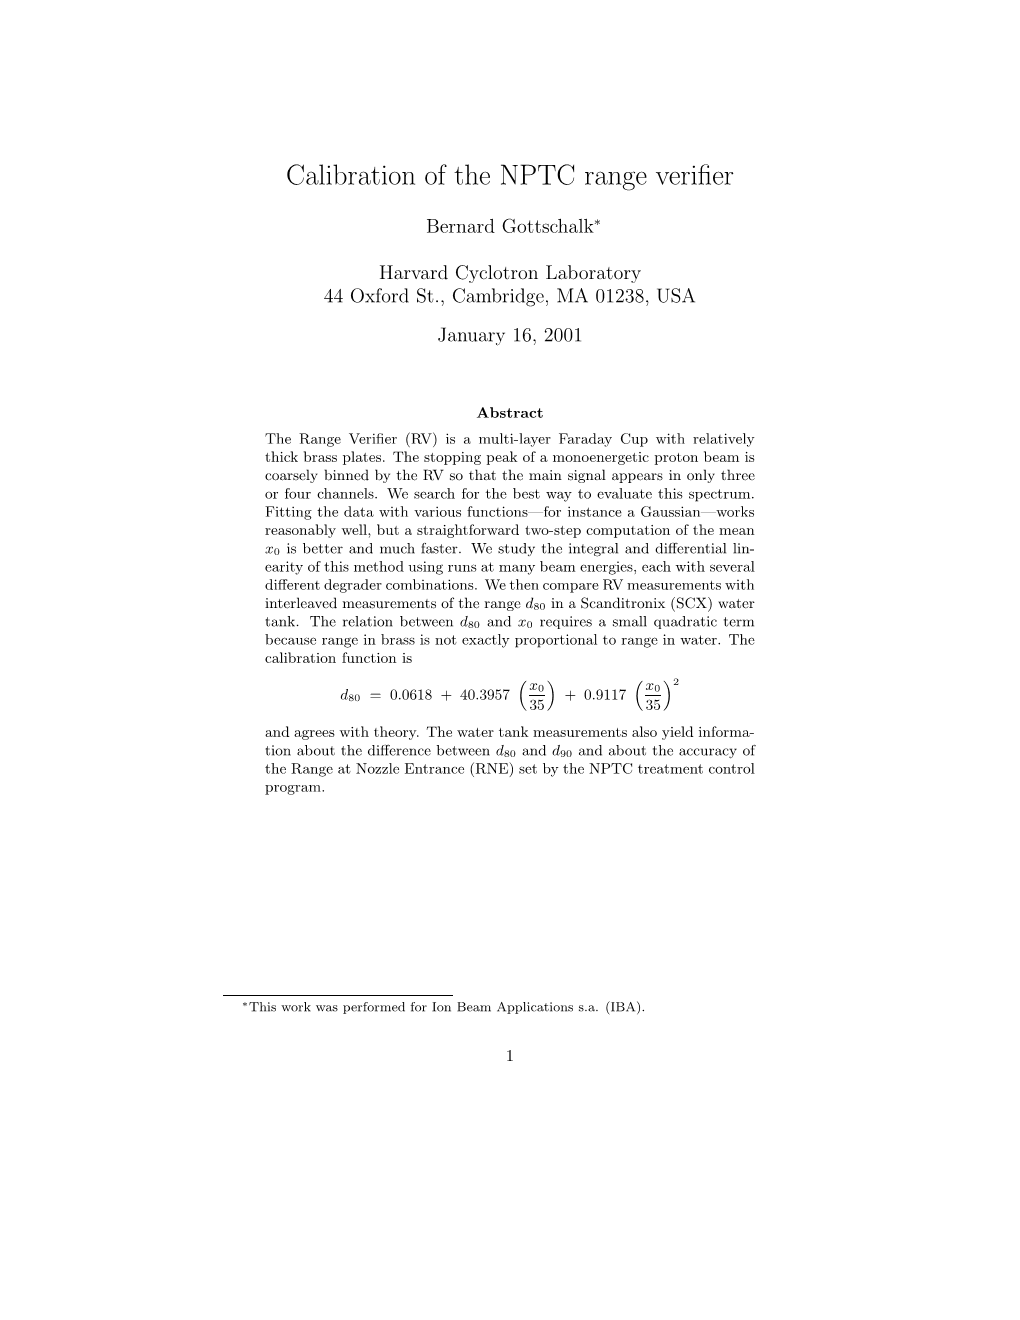 Calibration of the NPTC Range Verifier